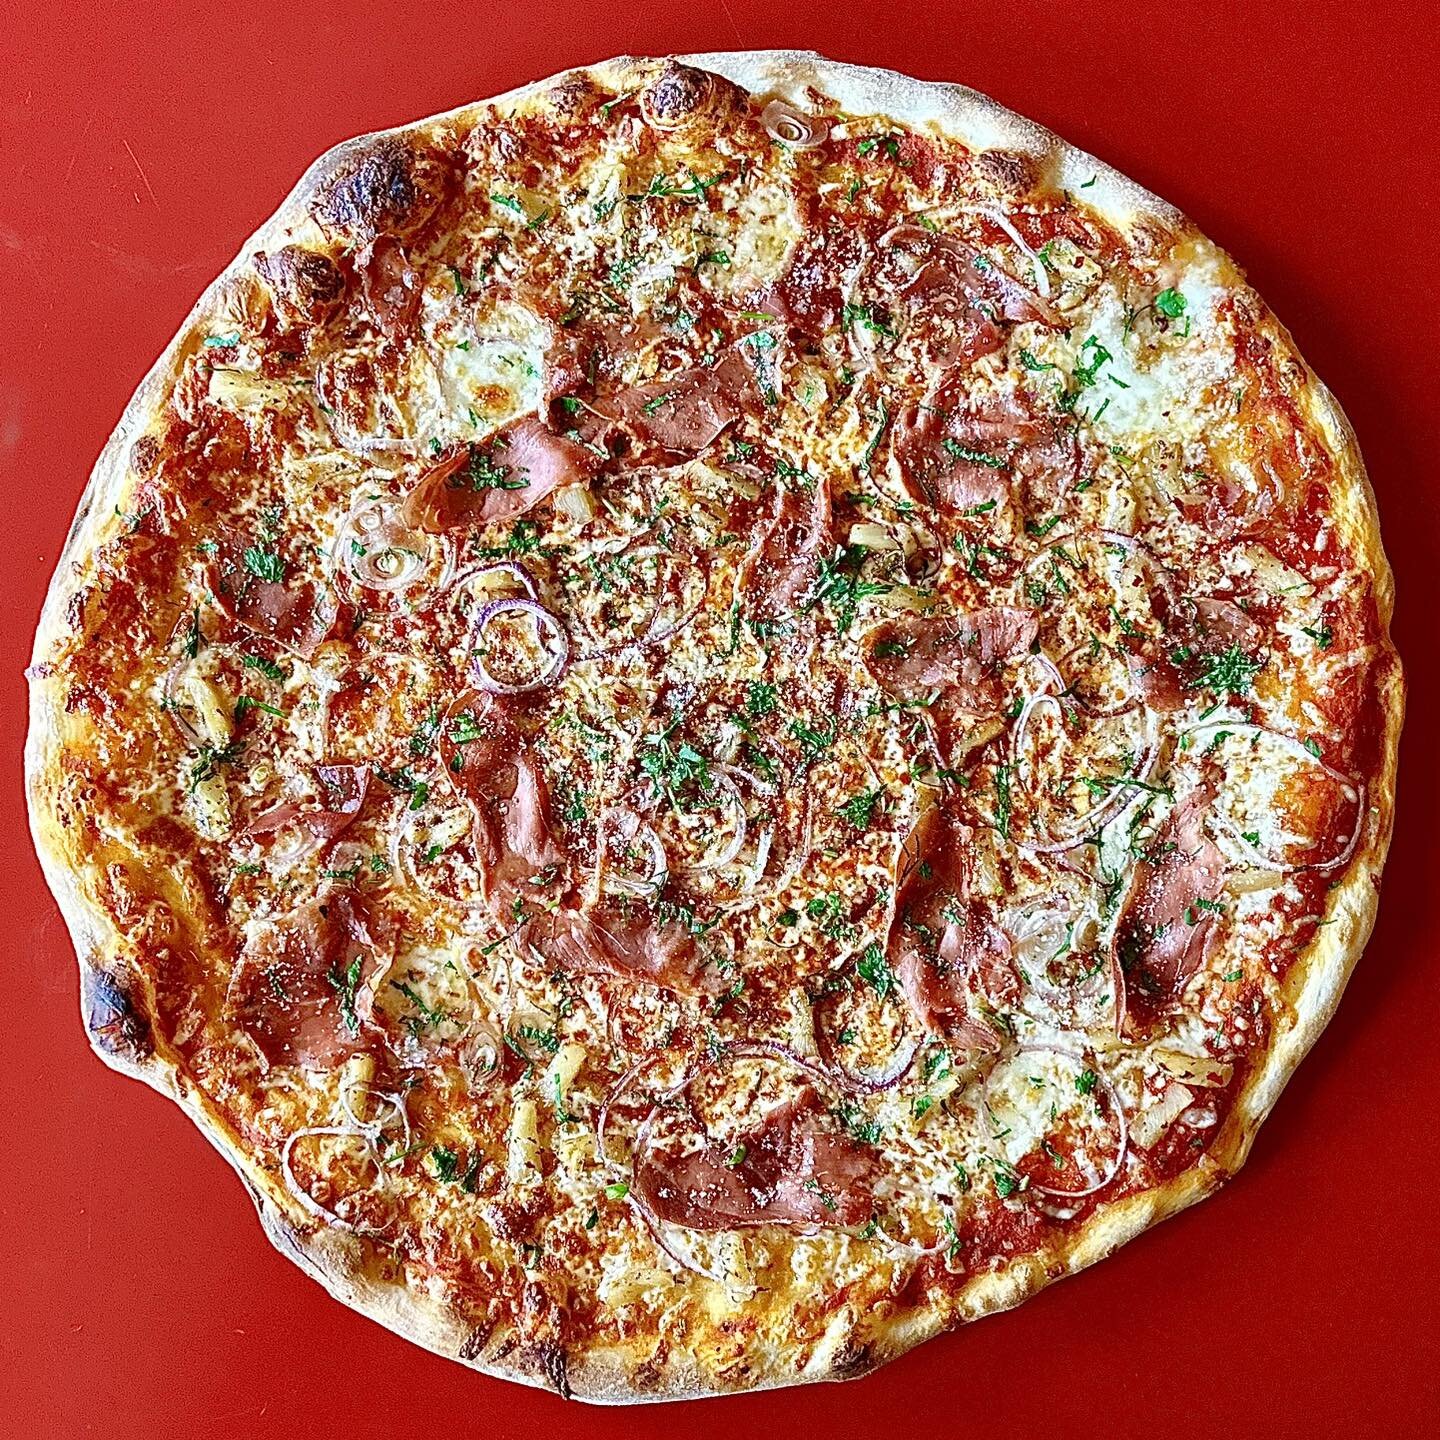 🔥 New Feature 🔥
'POKOLE': Marinara, Fior Di Latte Cheese, Shredded Mozzarella, Shaved Prosciutto, Pineapple, Red Onion, Hot Honey

Available at our Winnipeg location. 
.
.
.
.
.

#winnipeg #pizza #pizzadelivery #featurepizza #shortyspizza #westbroa